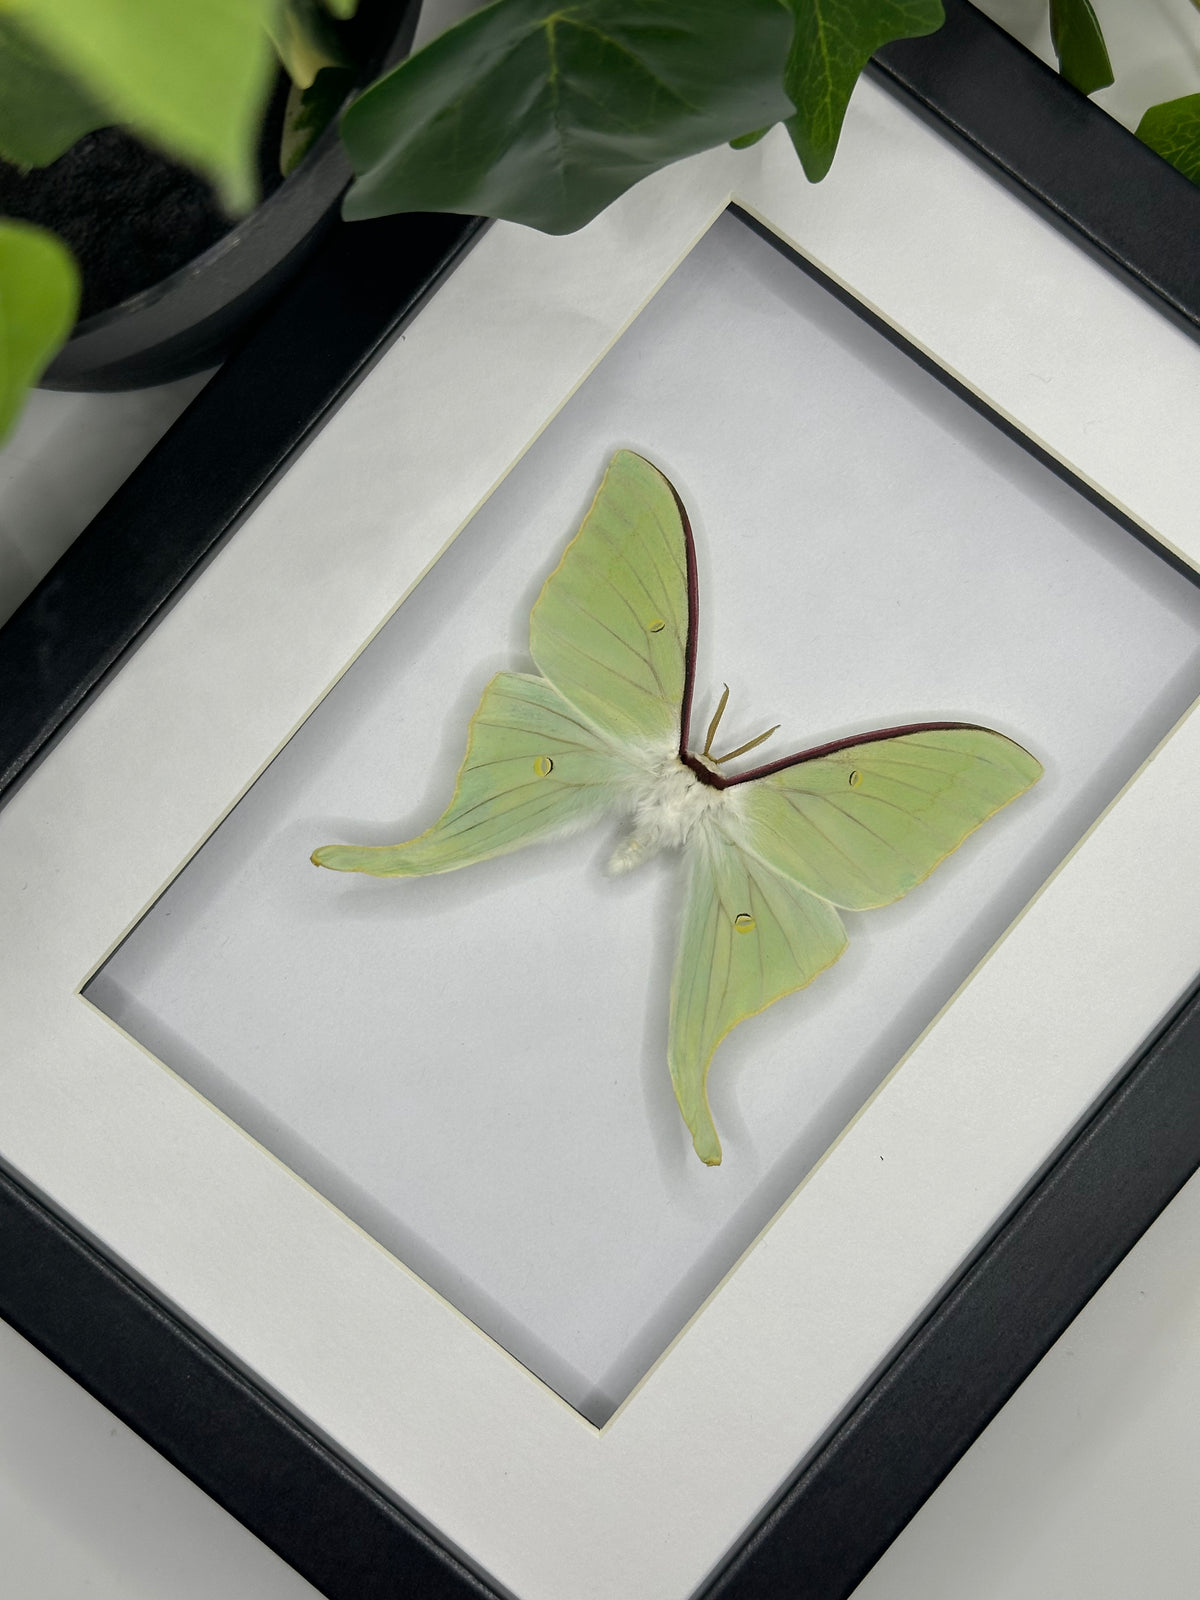 Sweetheart Luna Moth / Actias dulcinea in a frame | Male